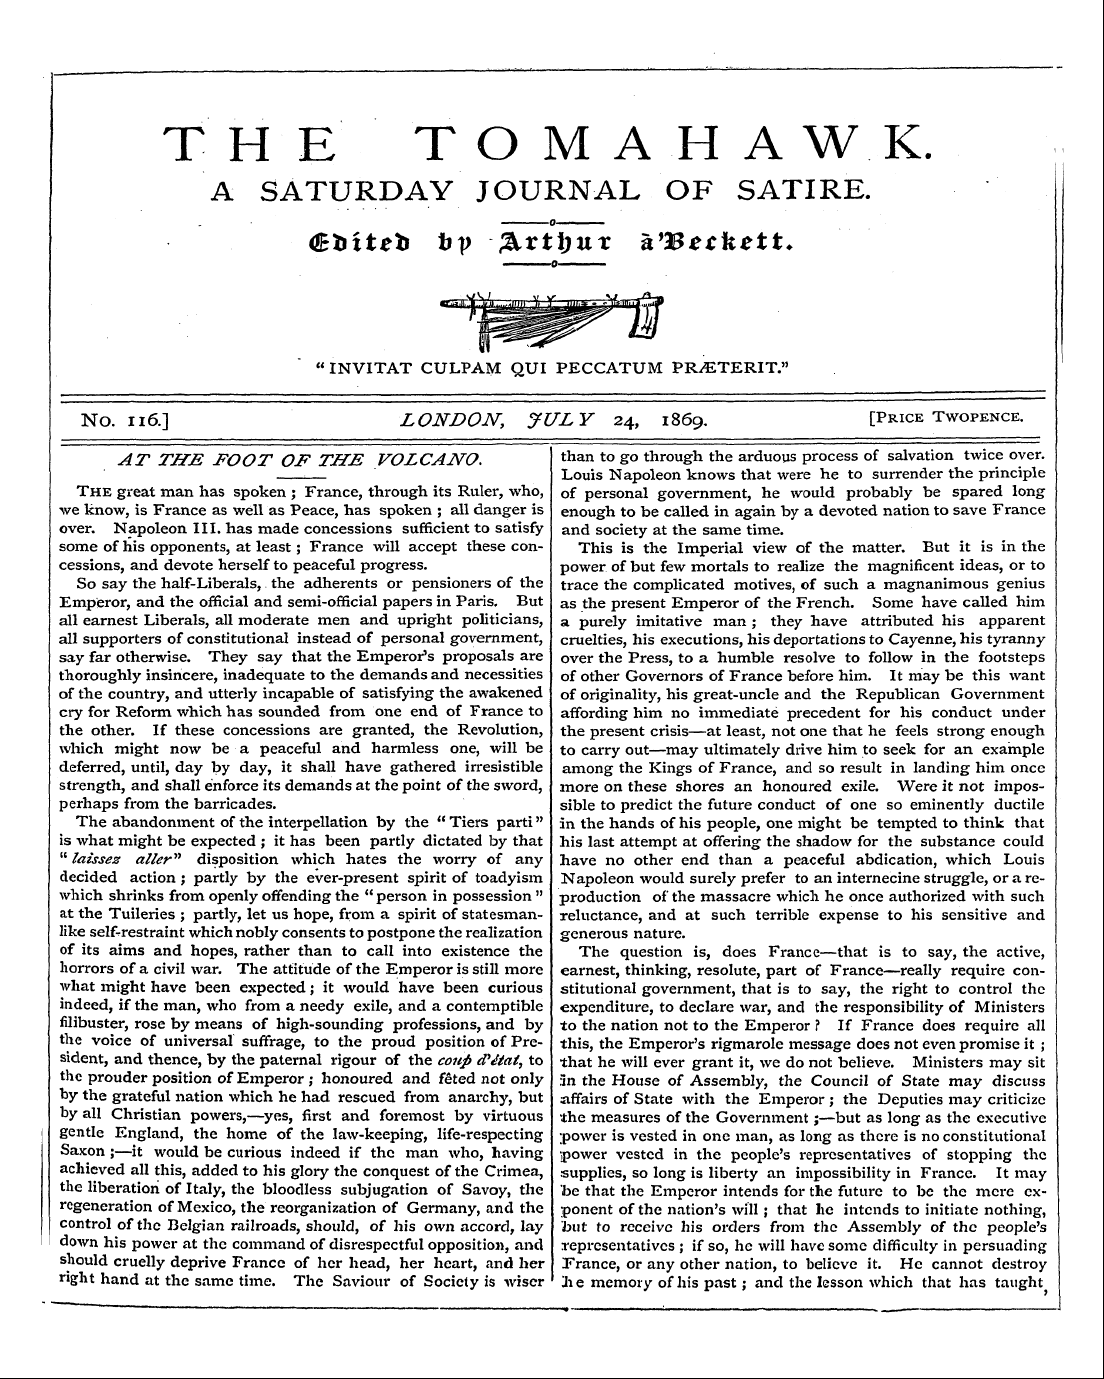 Tomahawk (1867-1870): jS F Y, 1st edition: 3